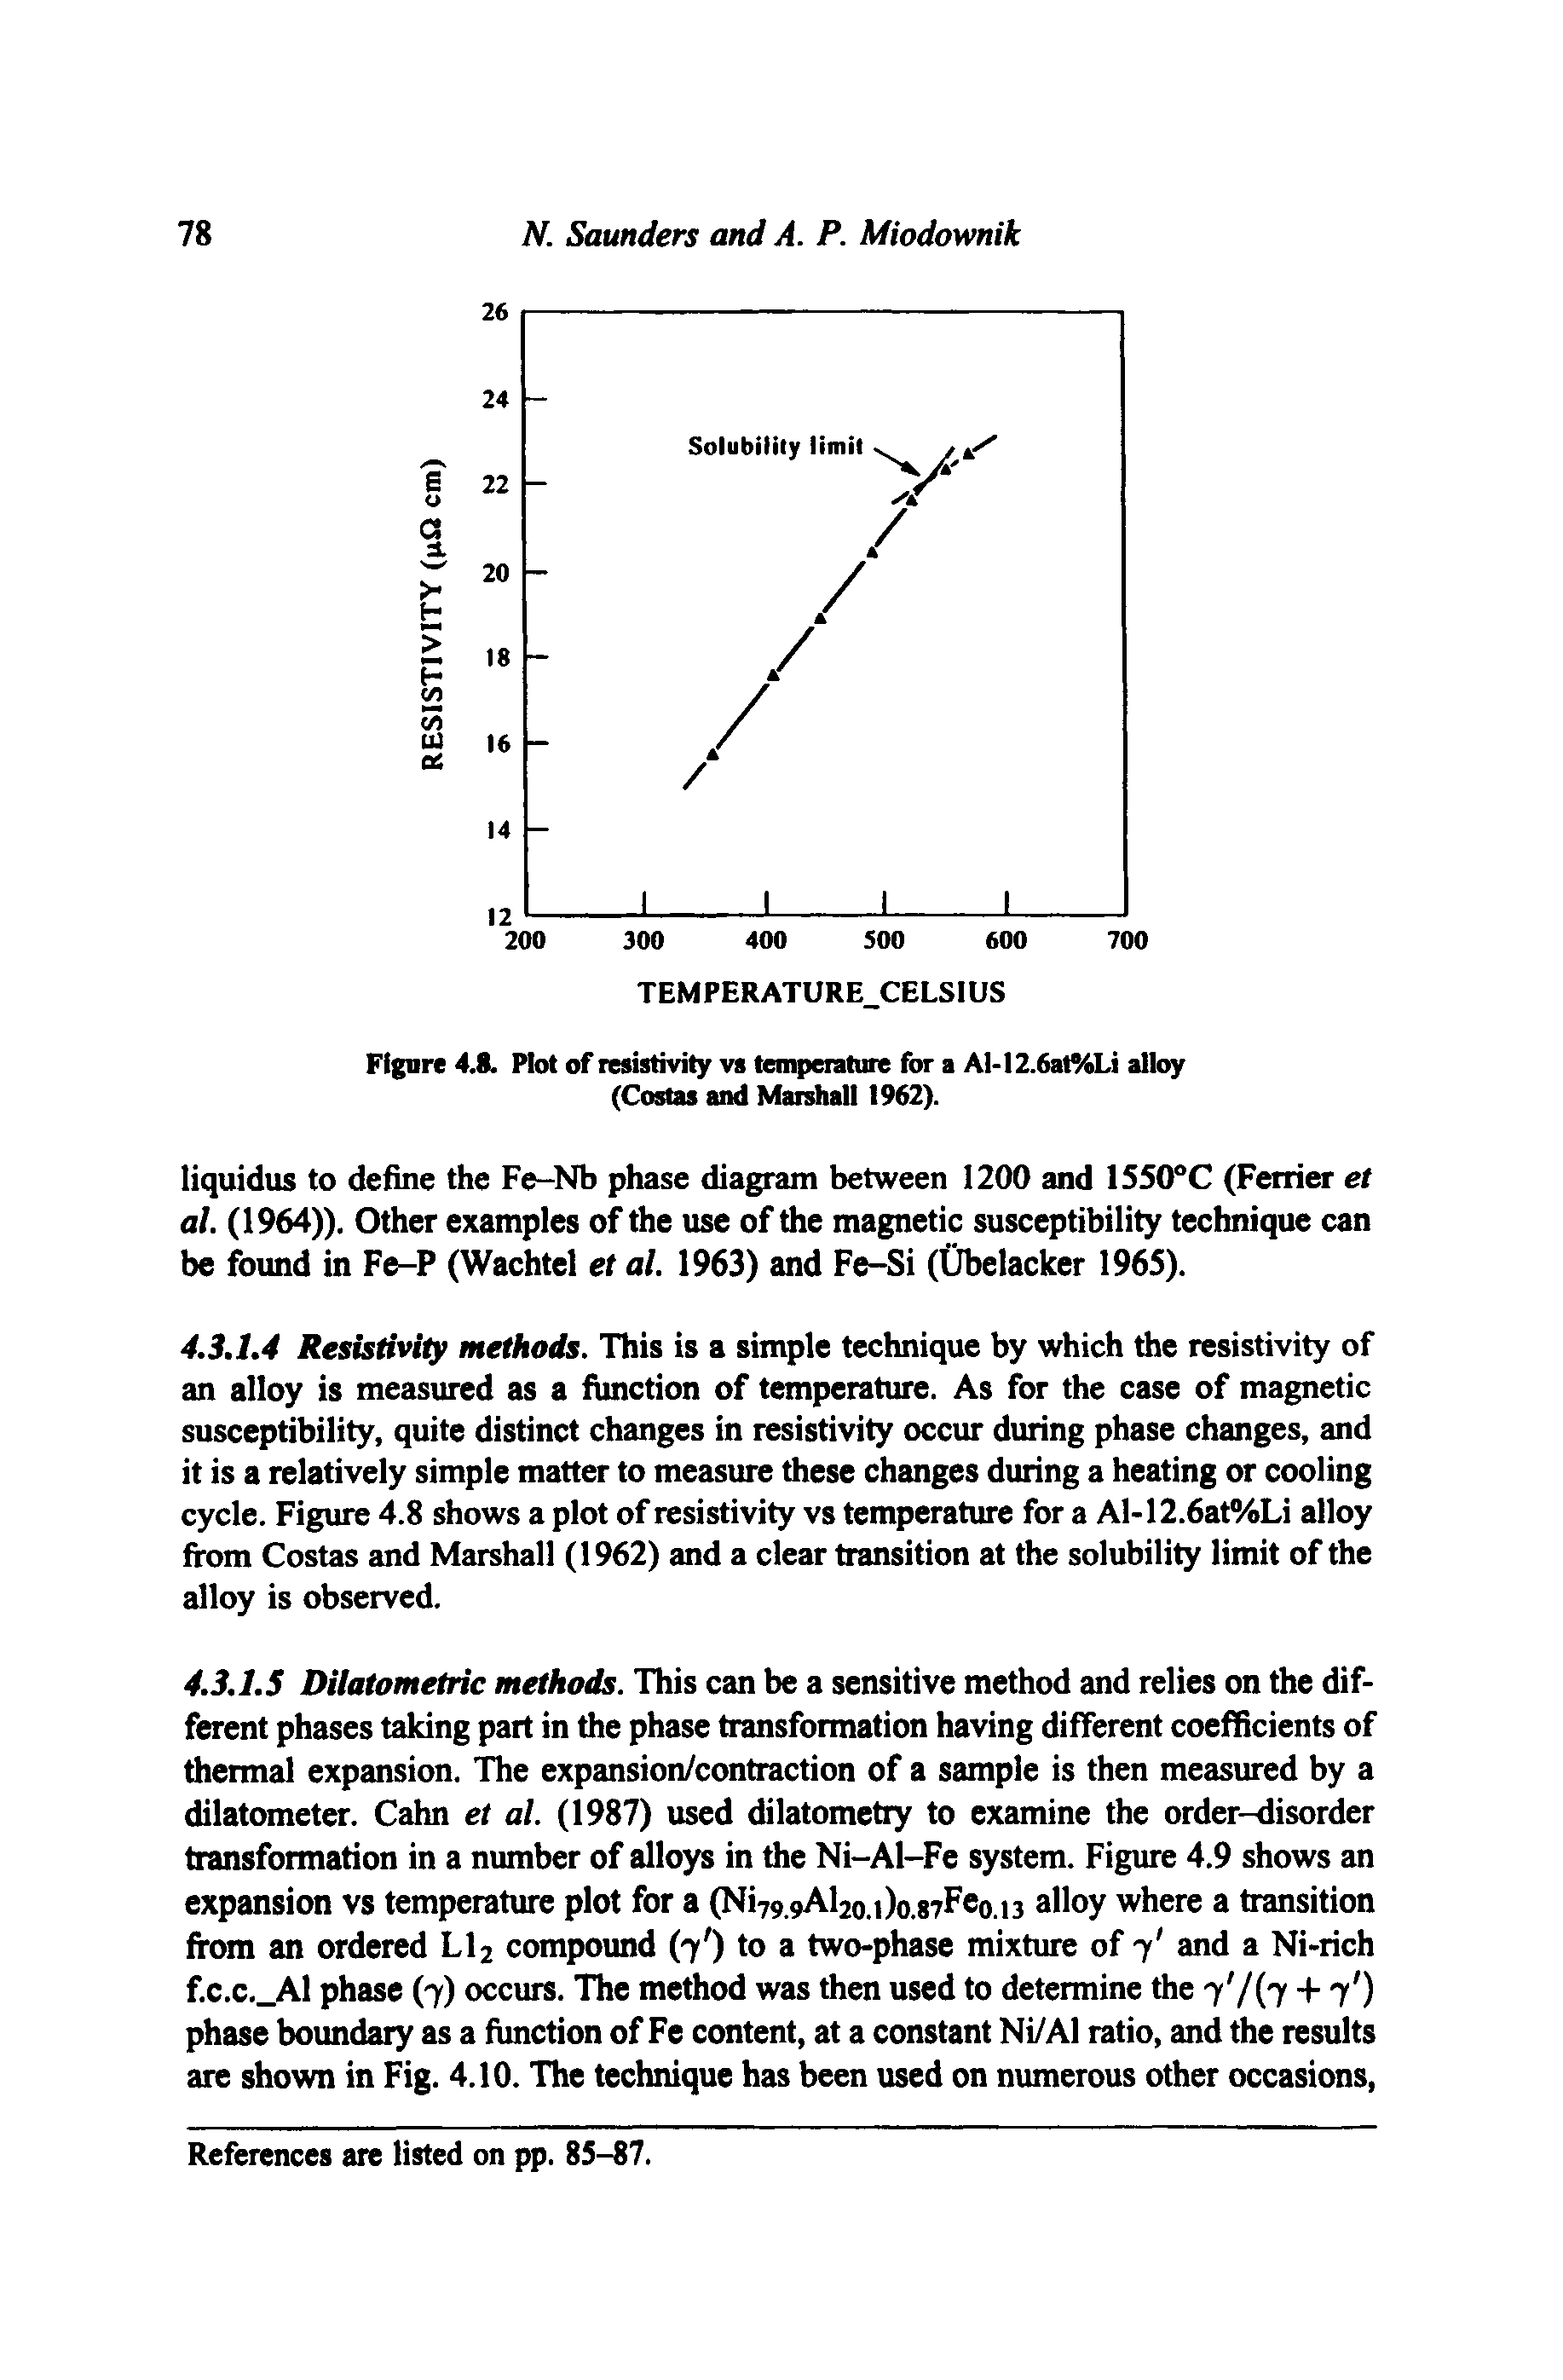 Figure 4.8. Plot of resistivity vs temperature for a AI-I2.6at%Li alloy (Costas and Marshall 1962).